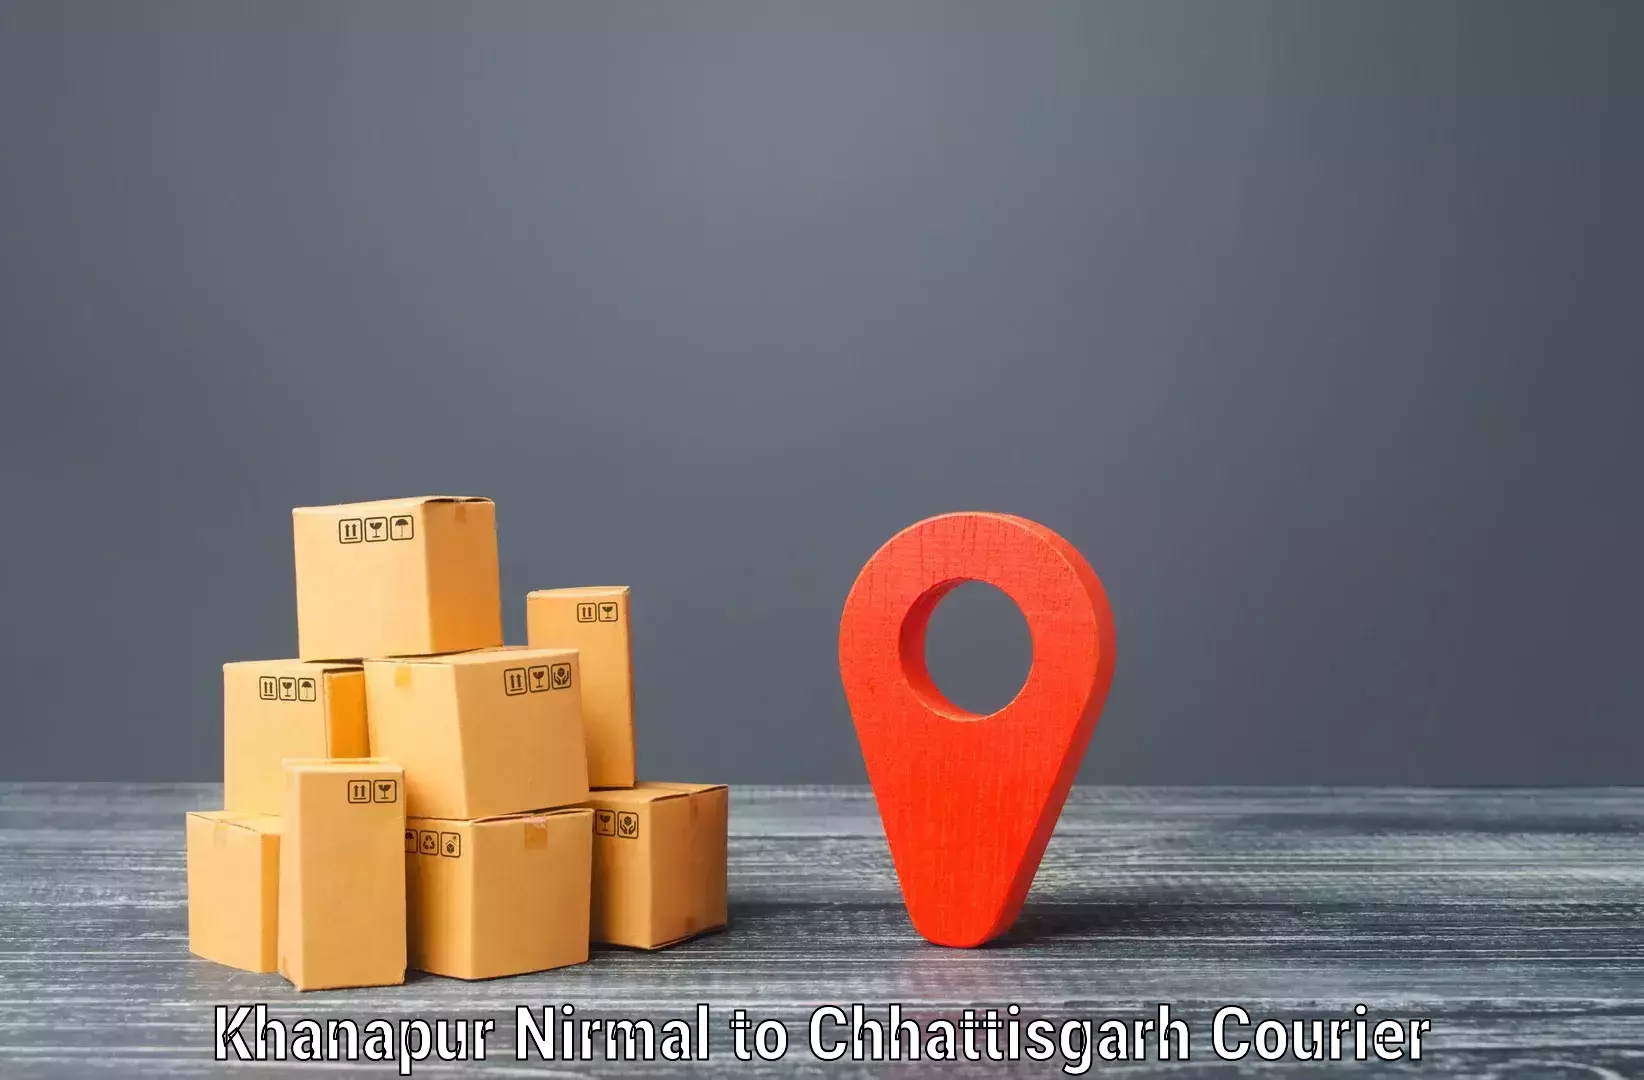 Cash on delivery service in Khanapur Nirmal to Patna Chhattisgarh